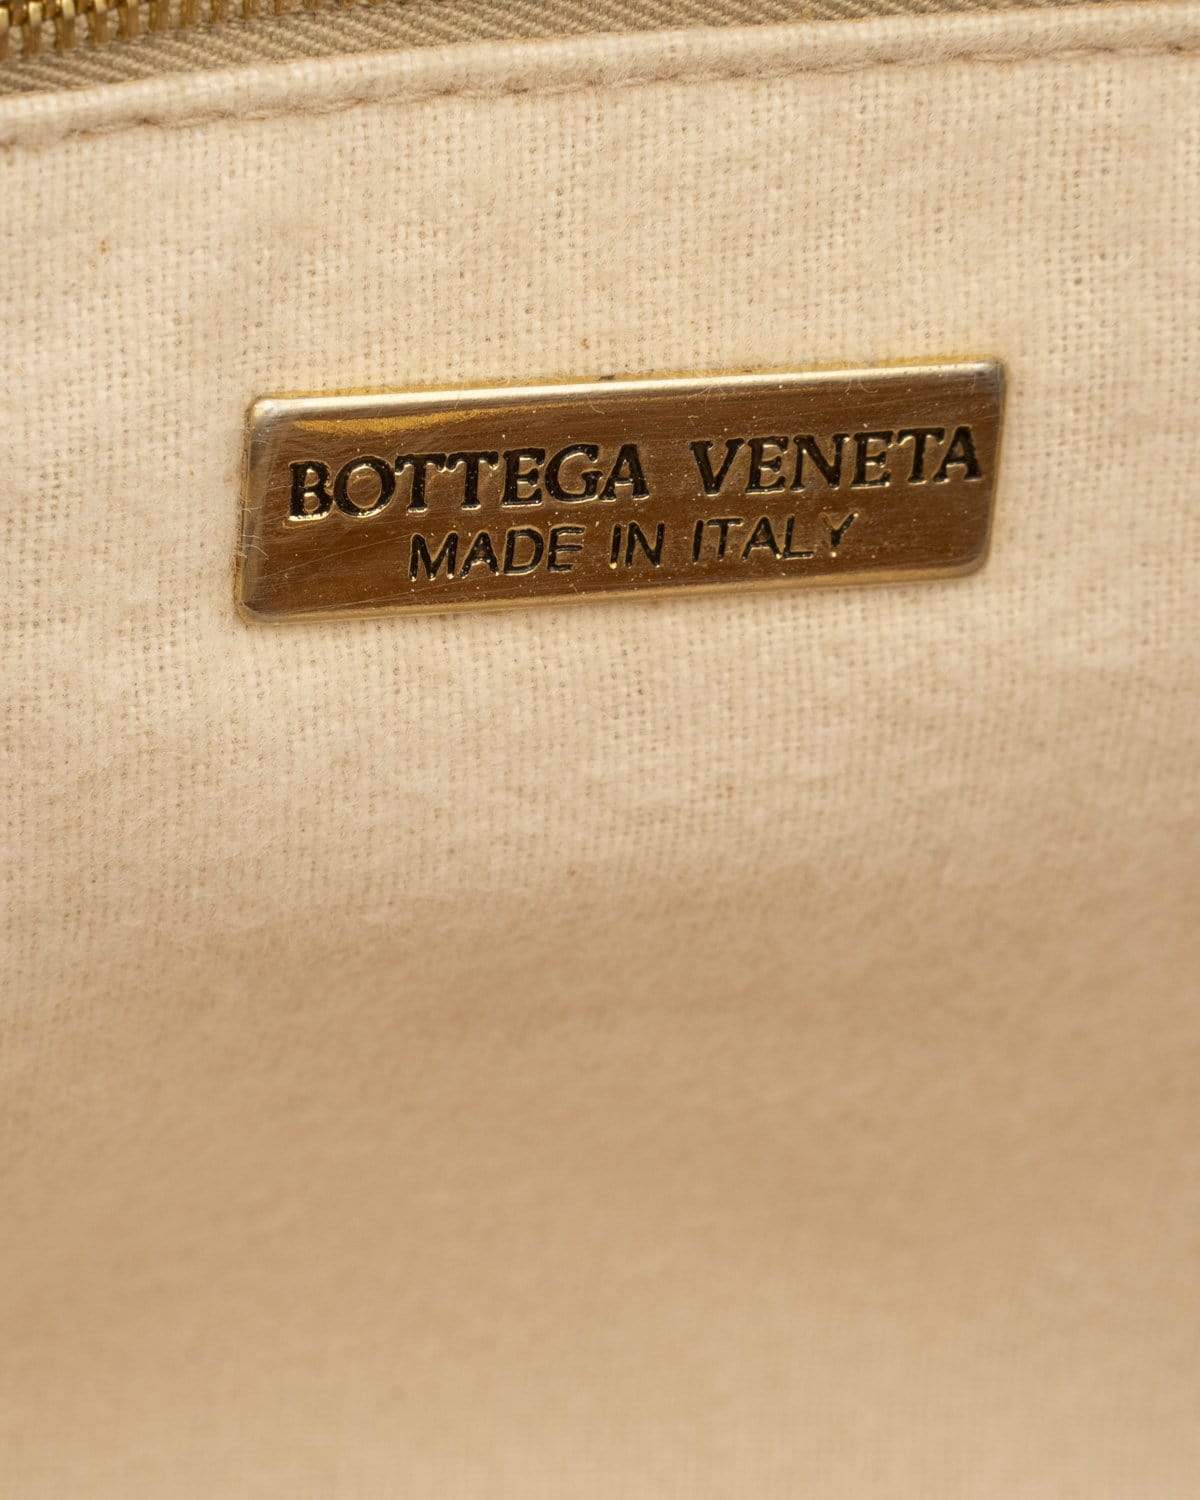 Bottega Vintage Bottega Veneta intrecciato woven lamb leather shoulder bag in bronze, beige, and brown color combo - AWC1074